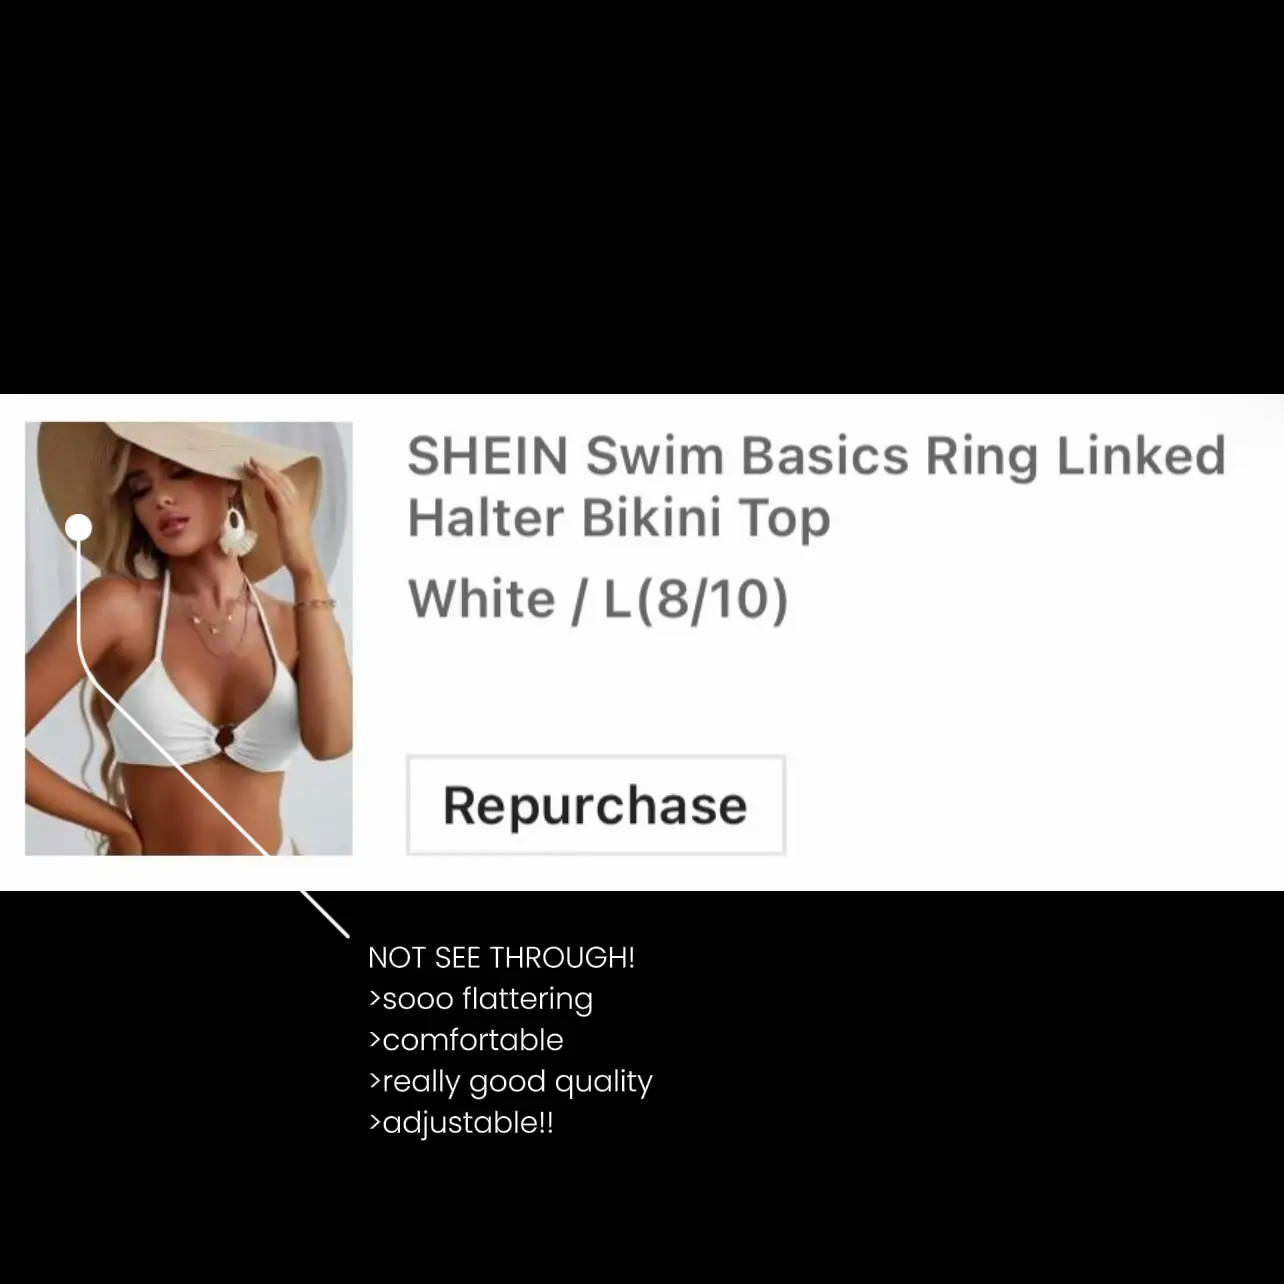 SHEIN bikini review 👙⛱️🌊☀️